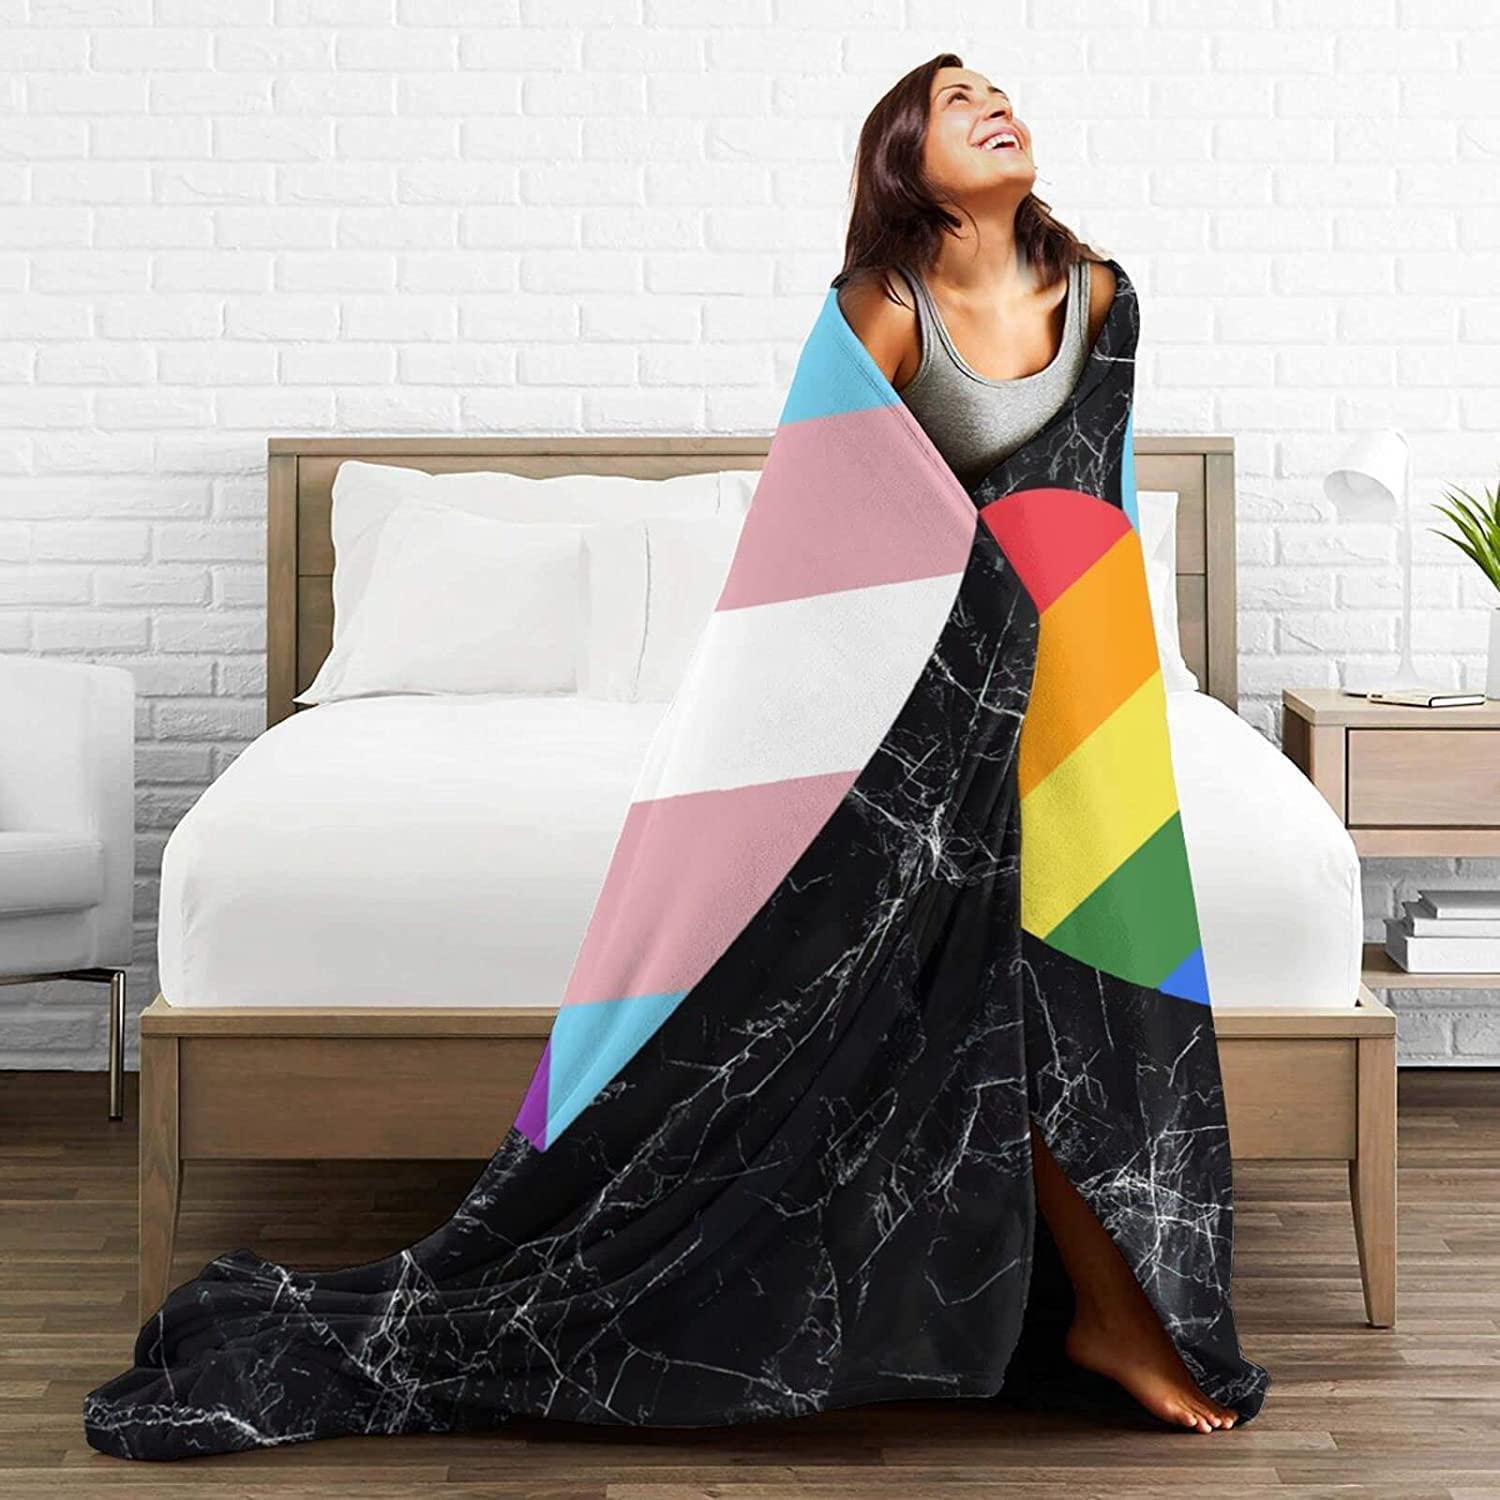 Lgbt Rainbow And Transgender Pride Heart Blankets/ Blanket Gift For Ally Pride/ Gay Blanket/ Trans Gift